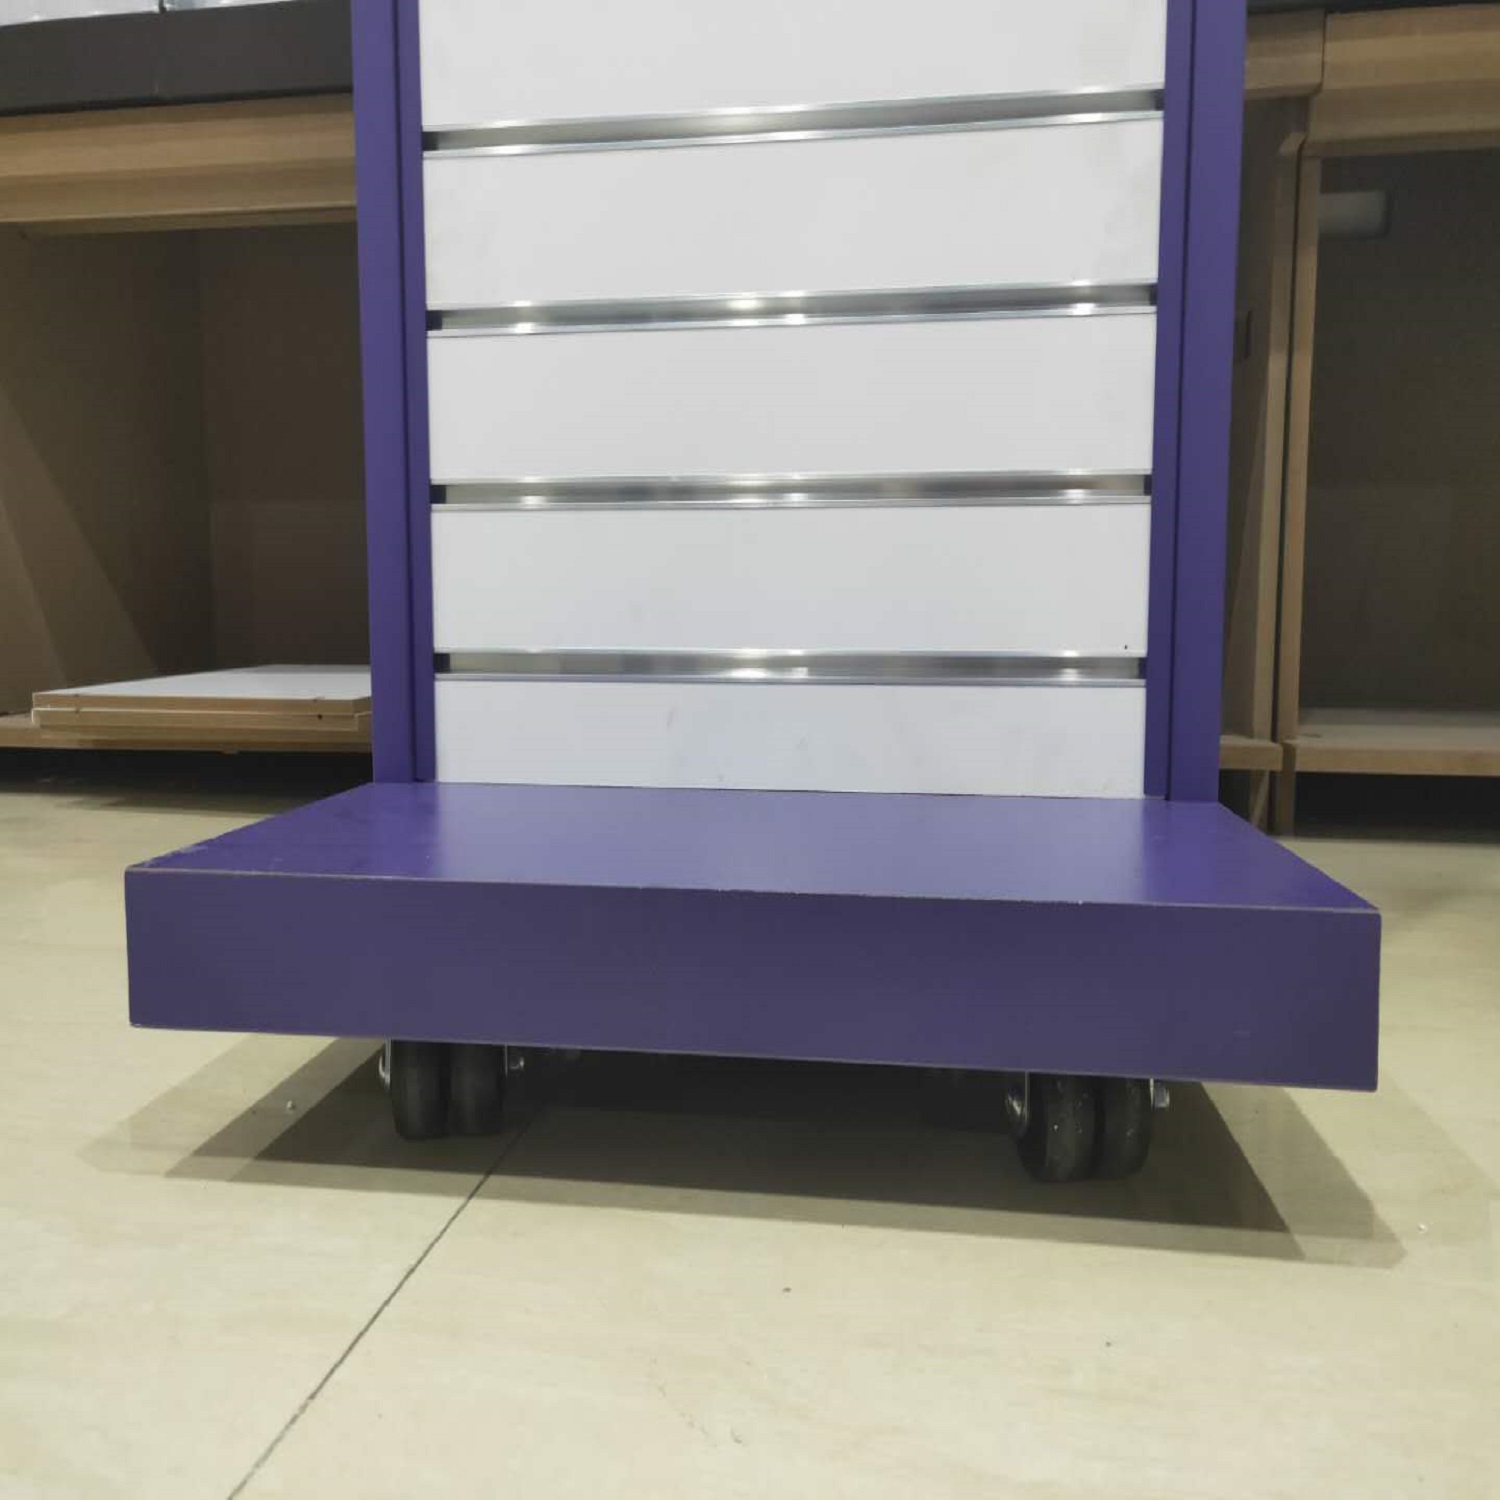 T-stand slatwall display rack